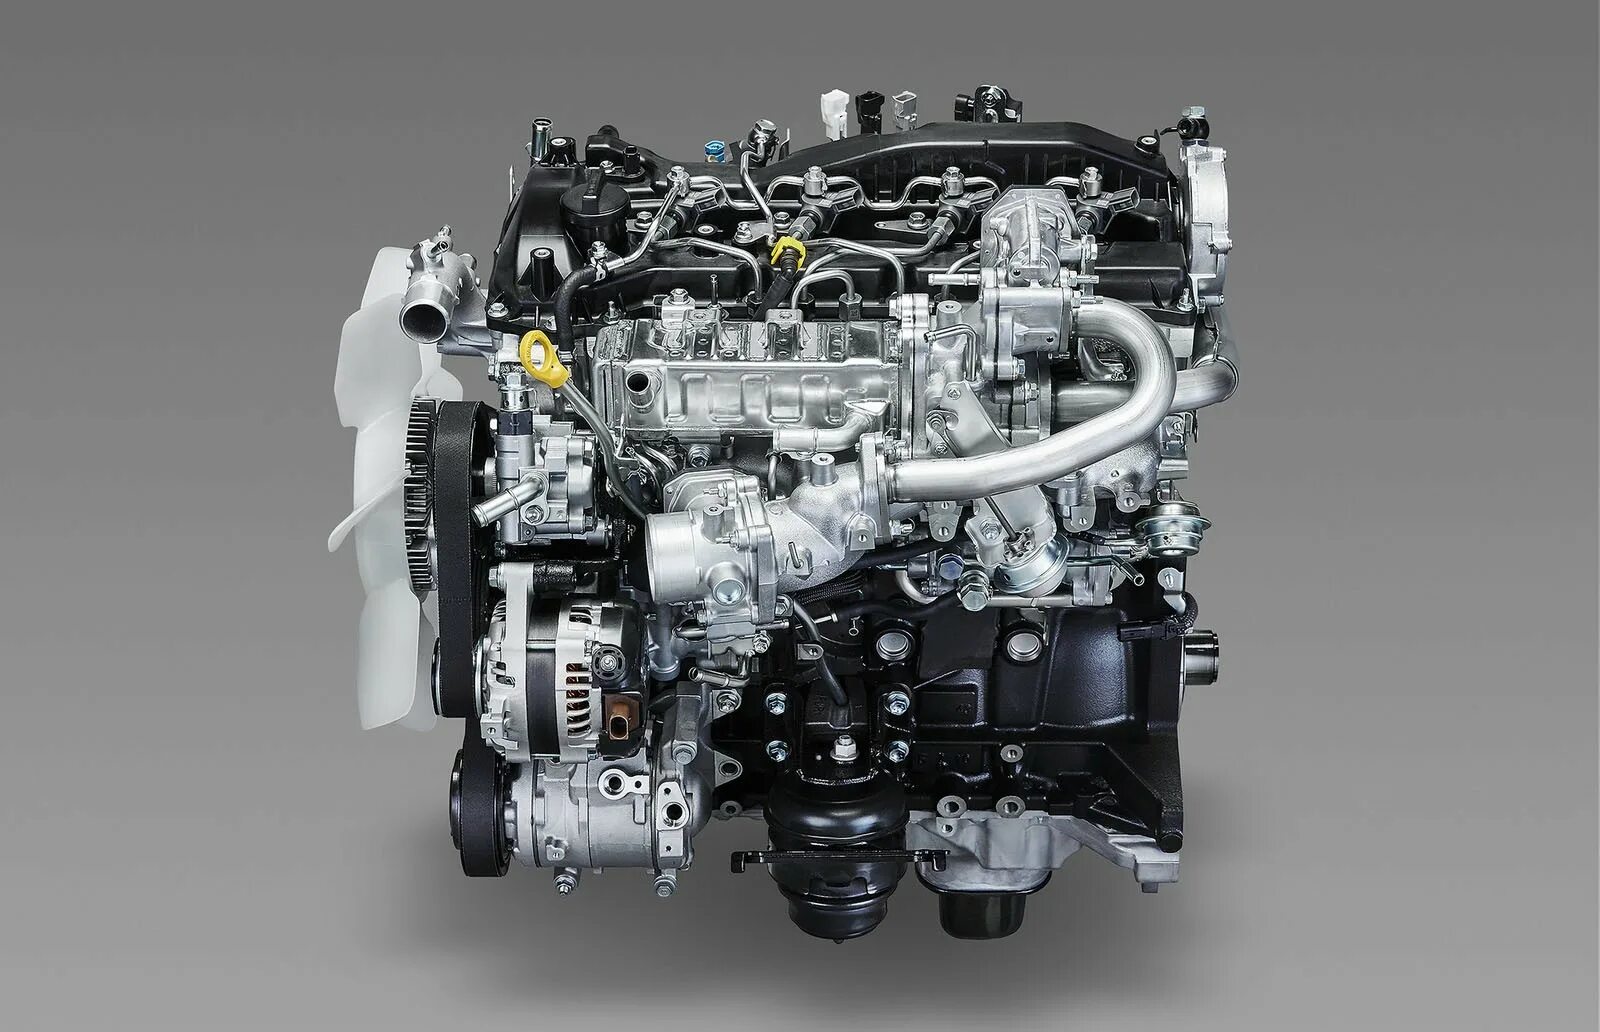 Toyota Hilux 2.8 дизель 1gd-FTV. Двигатель Toyota 1gd-FTV. Тойота Прадо дизель 2.8 (1gd-FTV). Дизельный двигатель Тойота 2.8. Тойота дизель б